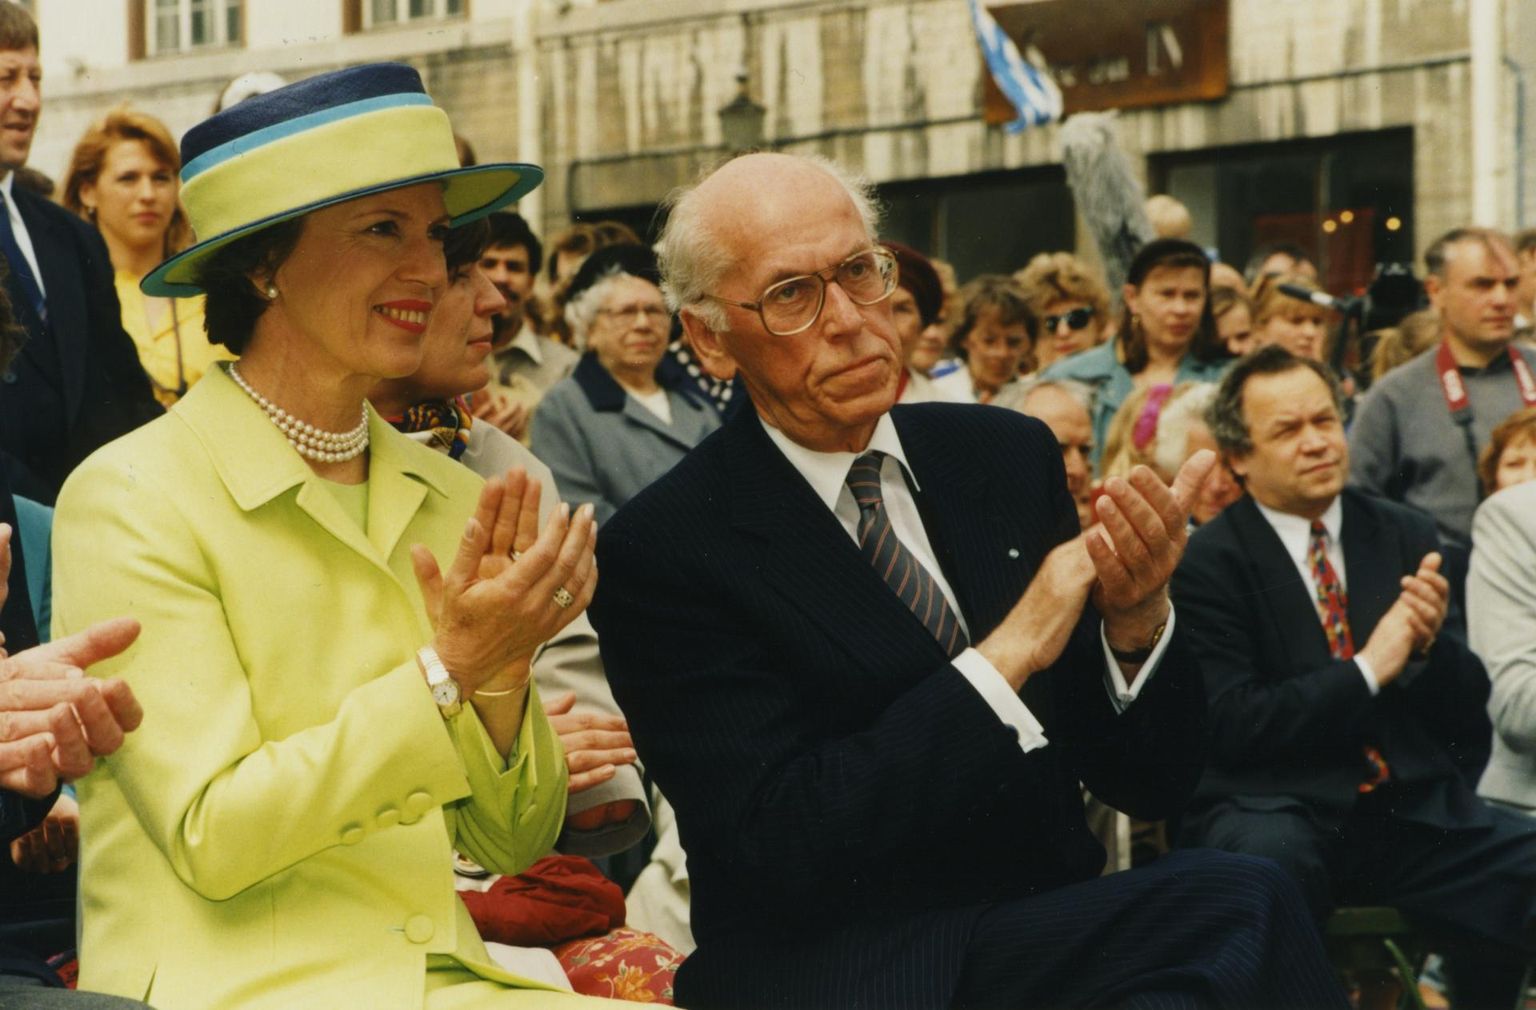 Tallinnas, 01.06.1996 Taani printsess ja prints Vanalinna päevadel. Lennart Meri ja Taani printsess Tallinna Vanalinna päevi avamas. 